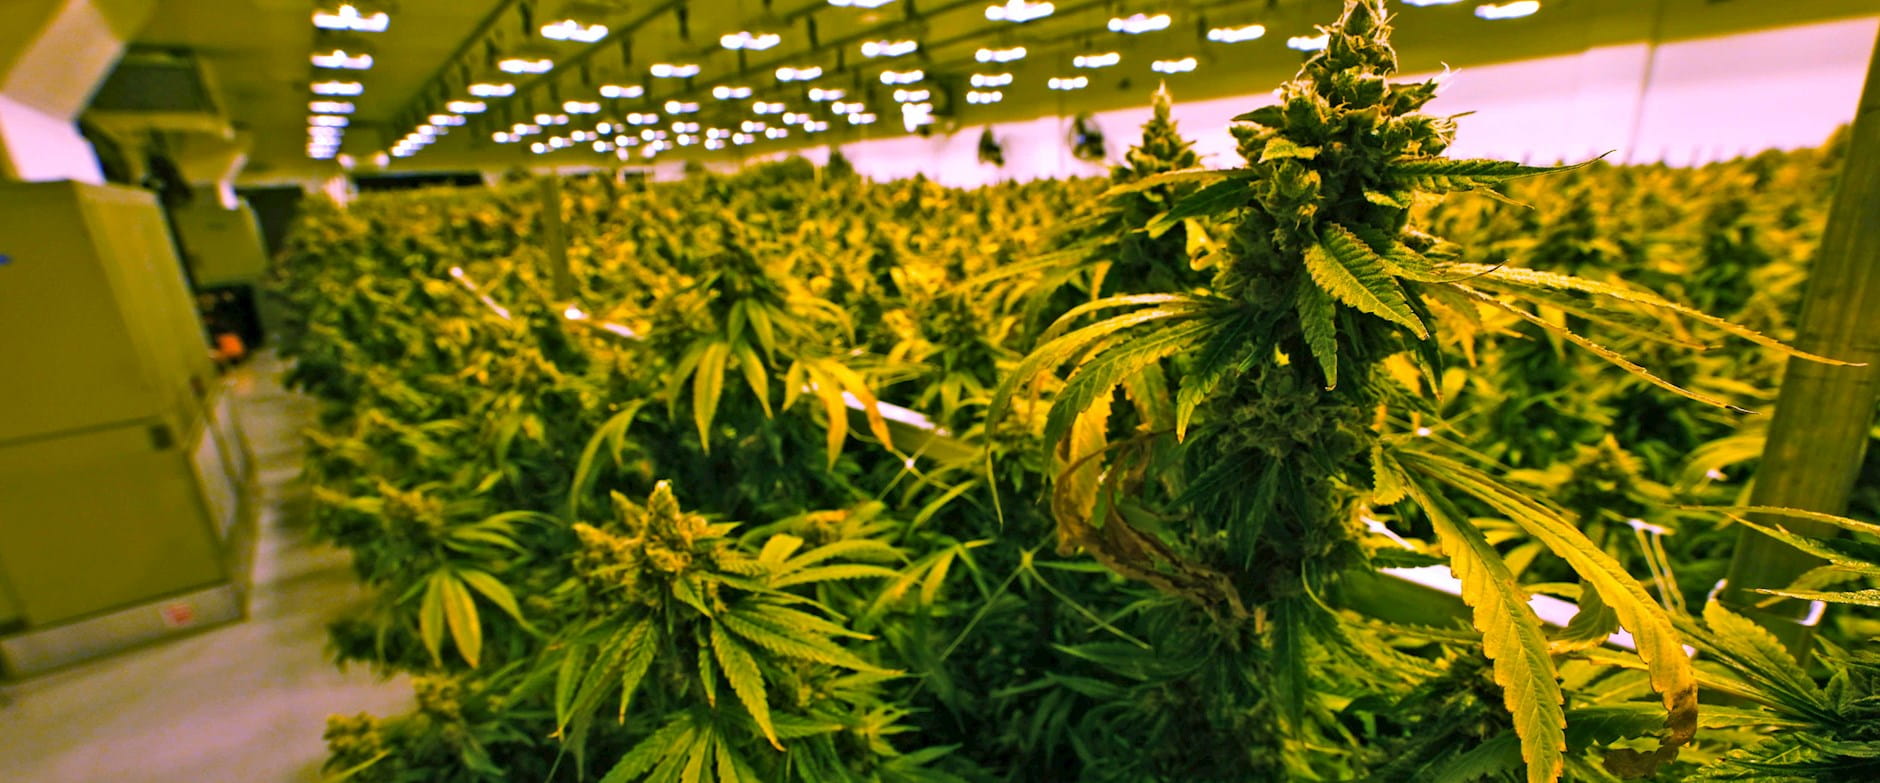 Rows of marijuana plants growing indoors